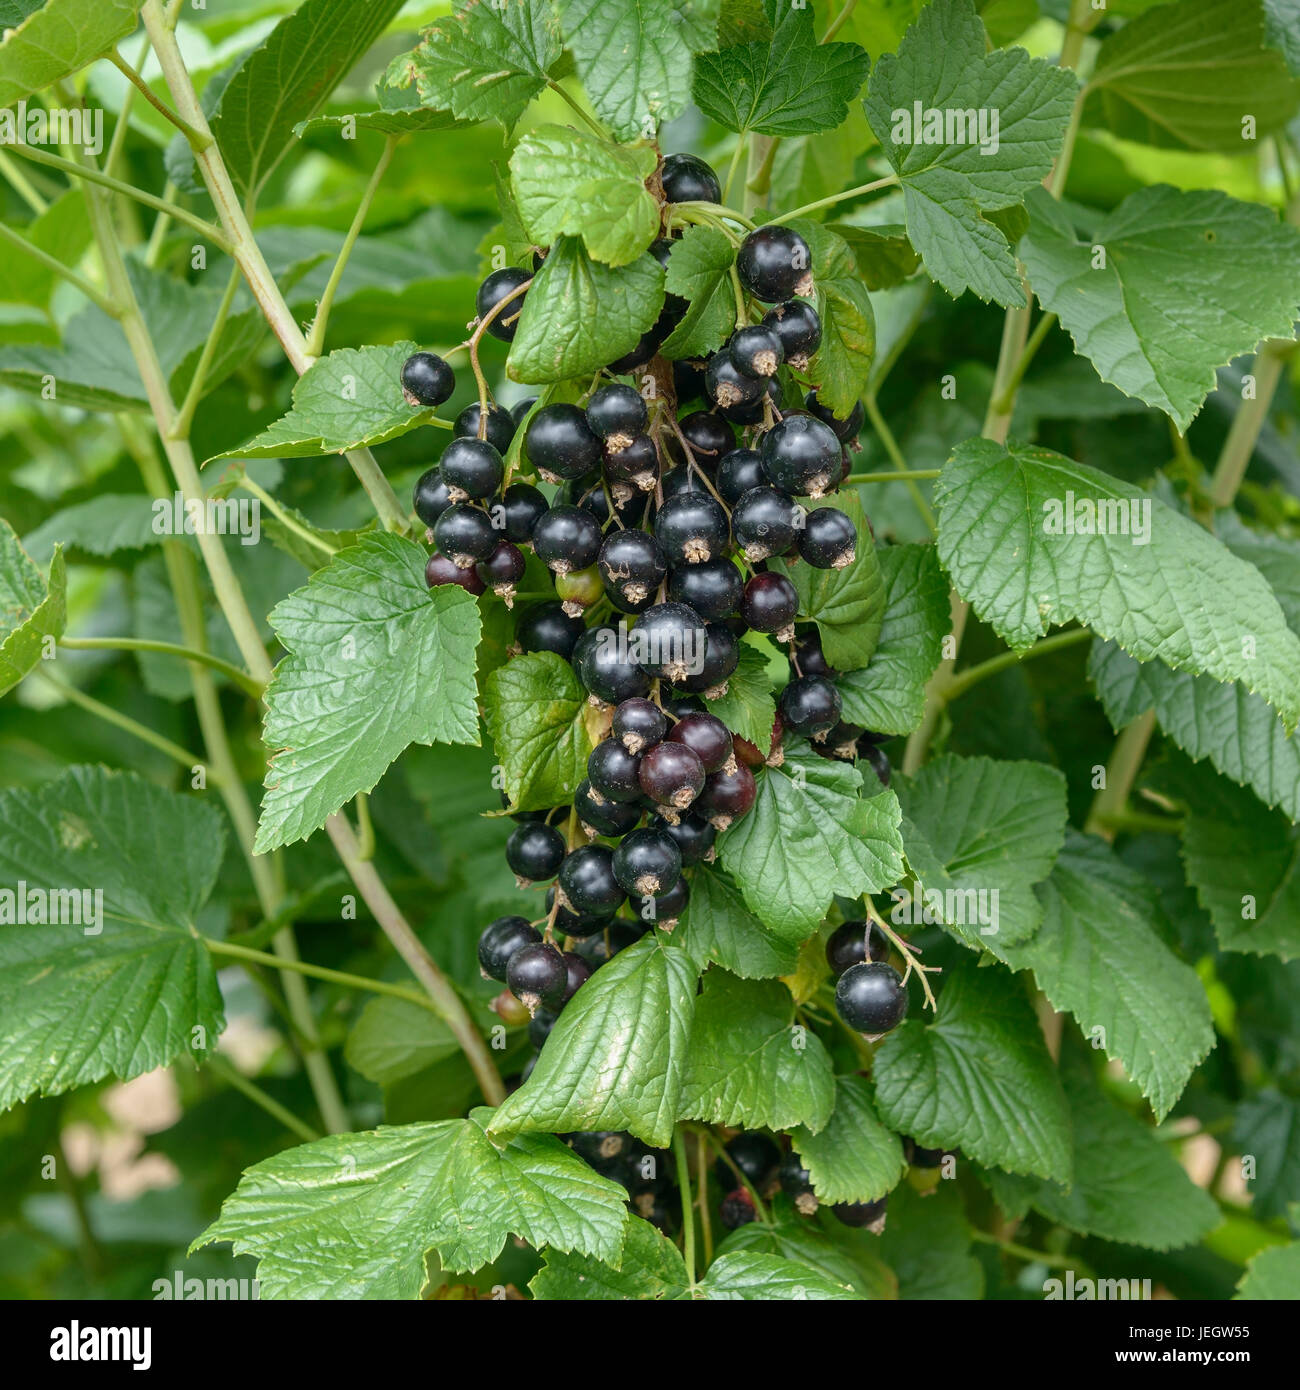 Black currant, Ribes nigrum Ben Tron , Schwarze Johannisbeere (Ribes nigrum 'Ben Tron') Stock Photo